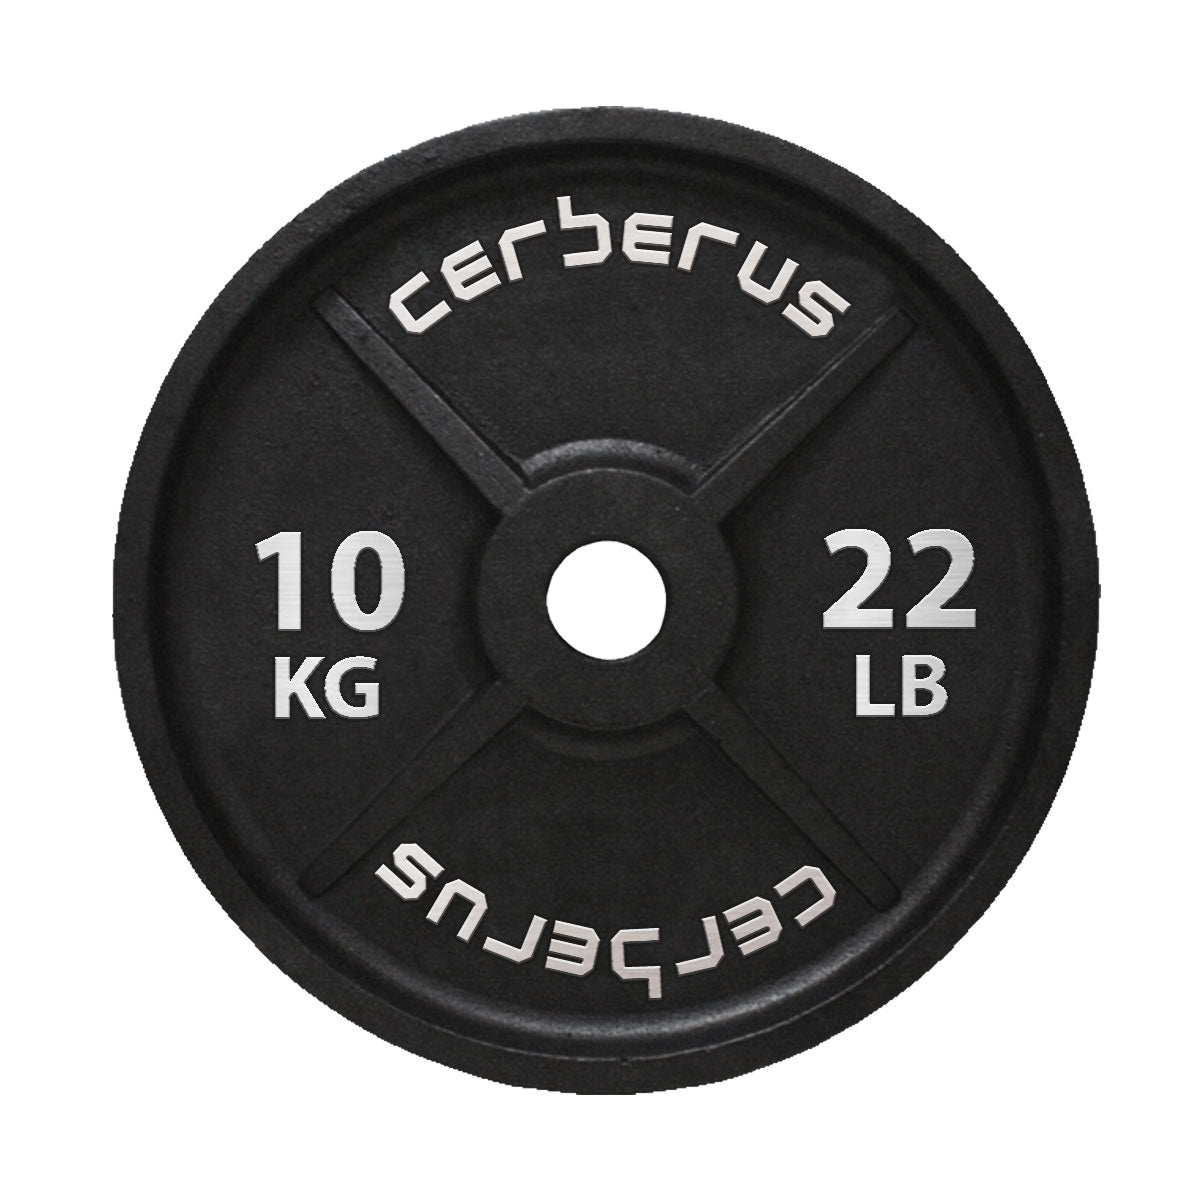 CERBERUS Cast Iron Olympic Plates – CERBERUS Strength